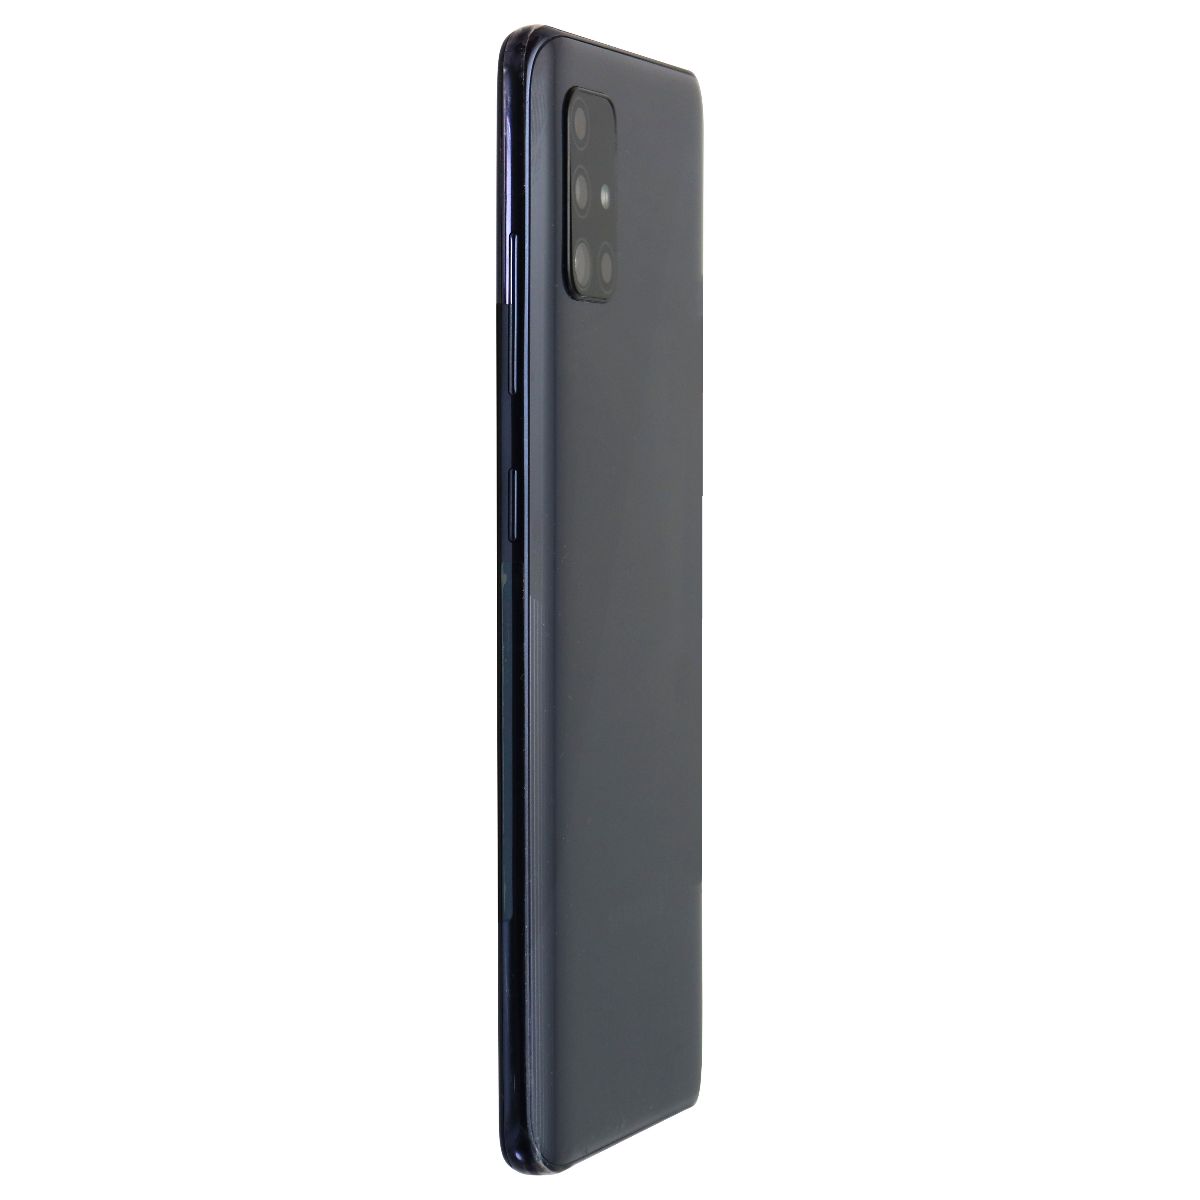 Samsung Galaxy A51 (6.5-inch) SM-A515U (Unlocked) - 128GB / Black Cell Phones & Smartphones Samsung    - Simple Cell Bulk Wholesale Pricing - USA Seller